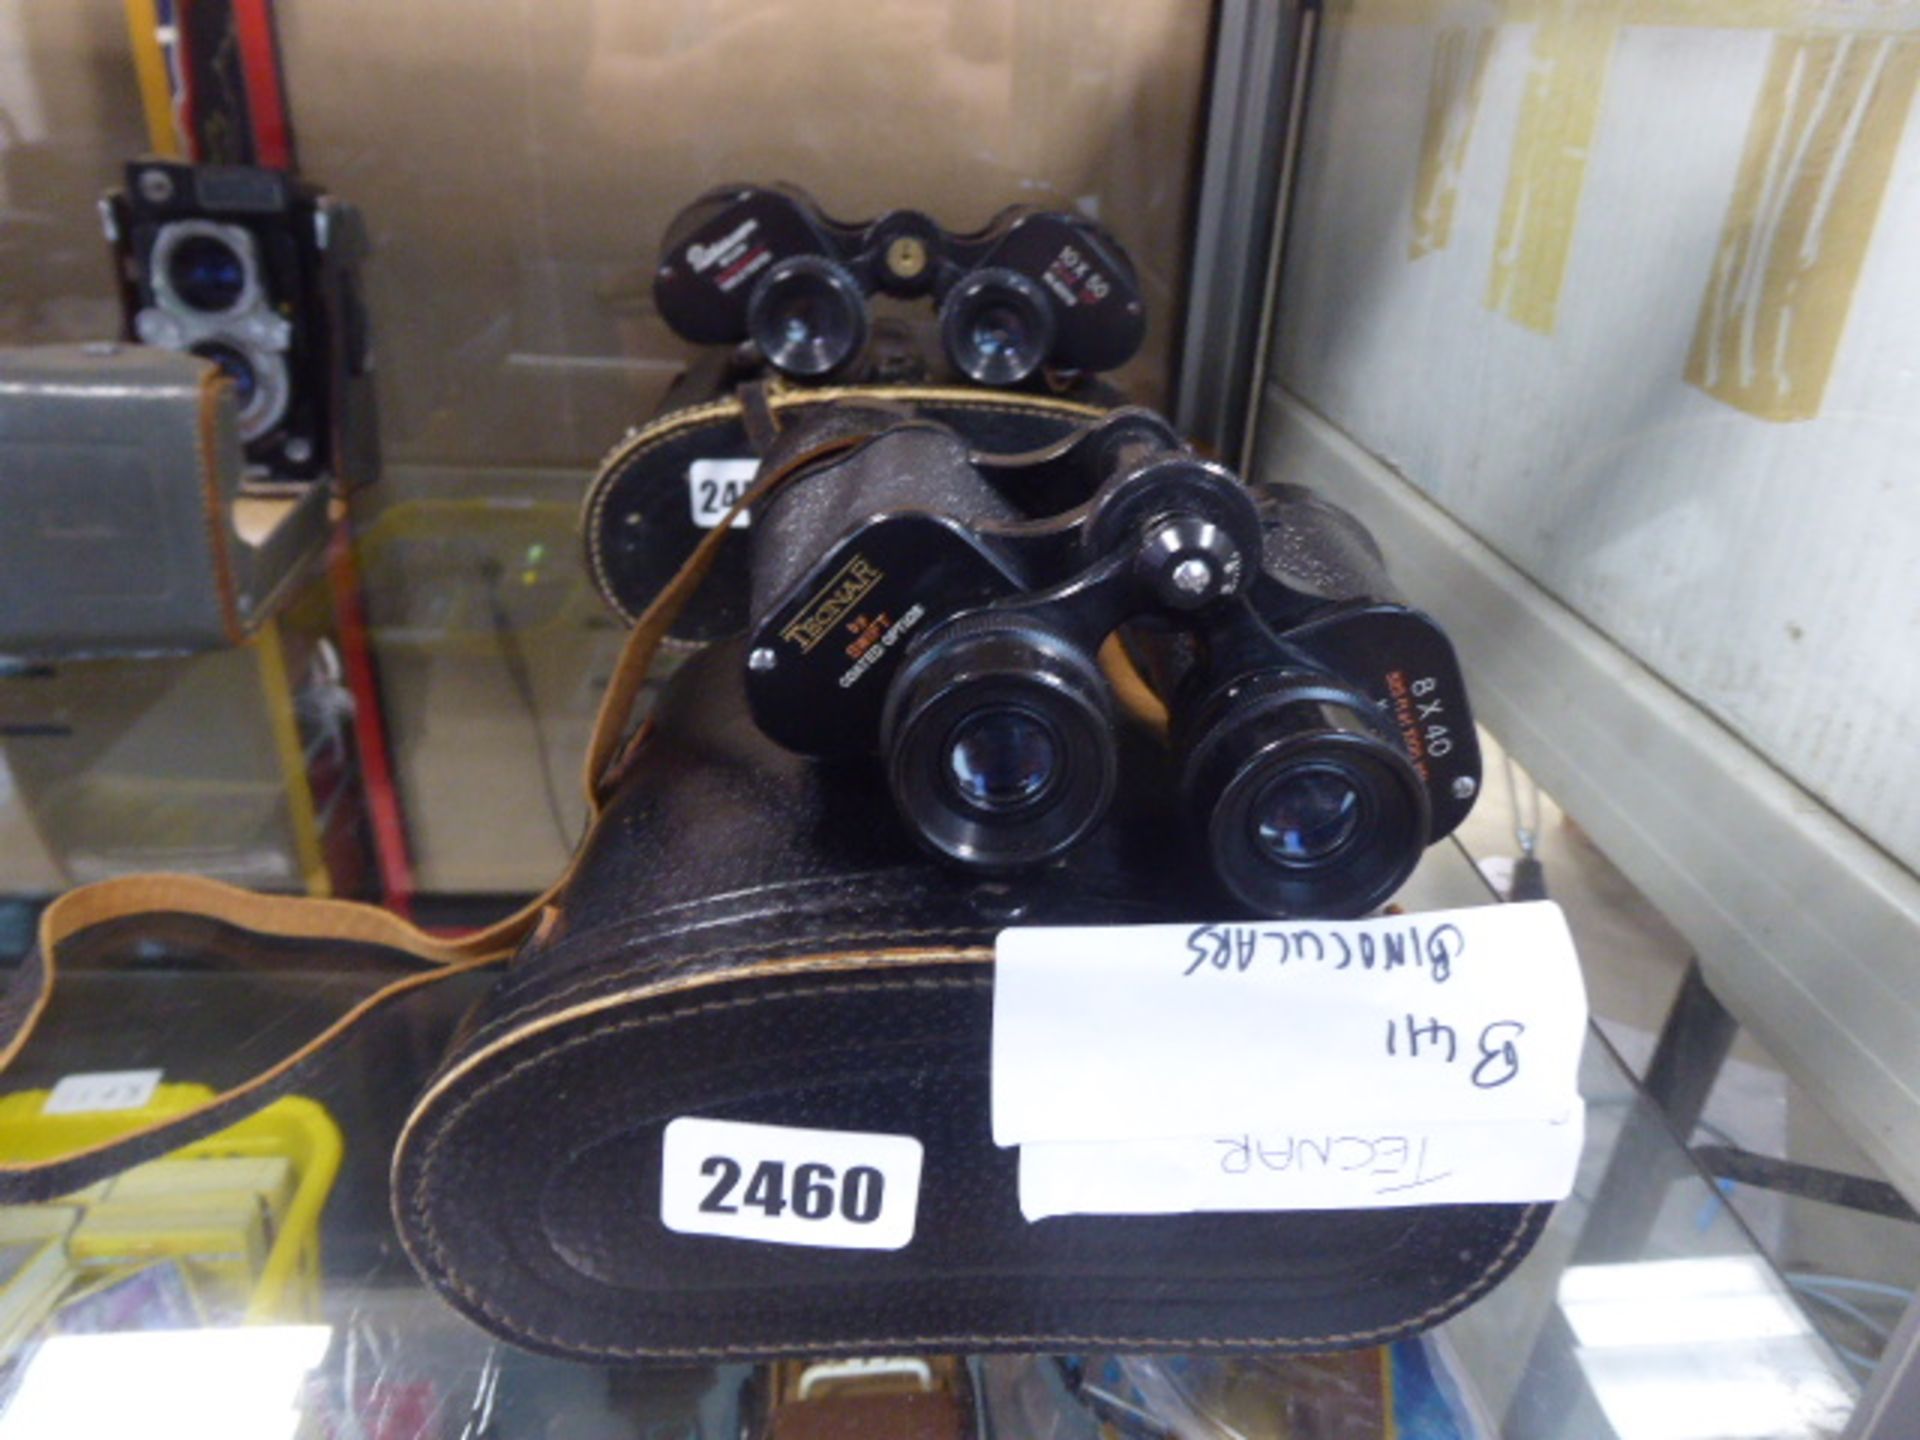 Pair of Tecnar 8x40 binoculars with case